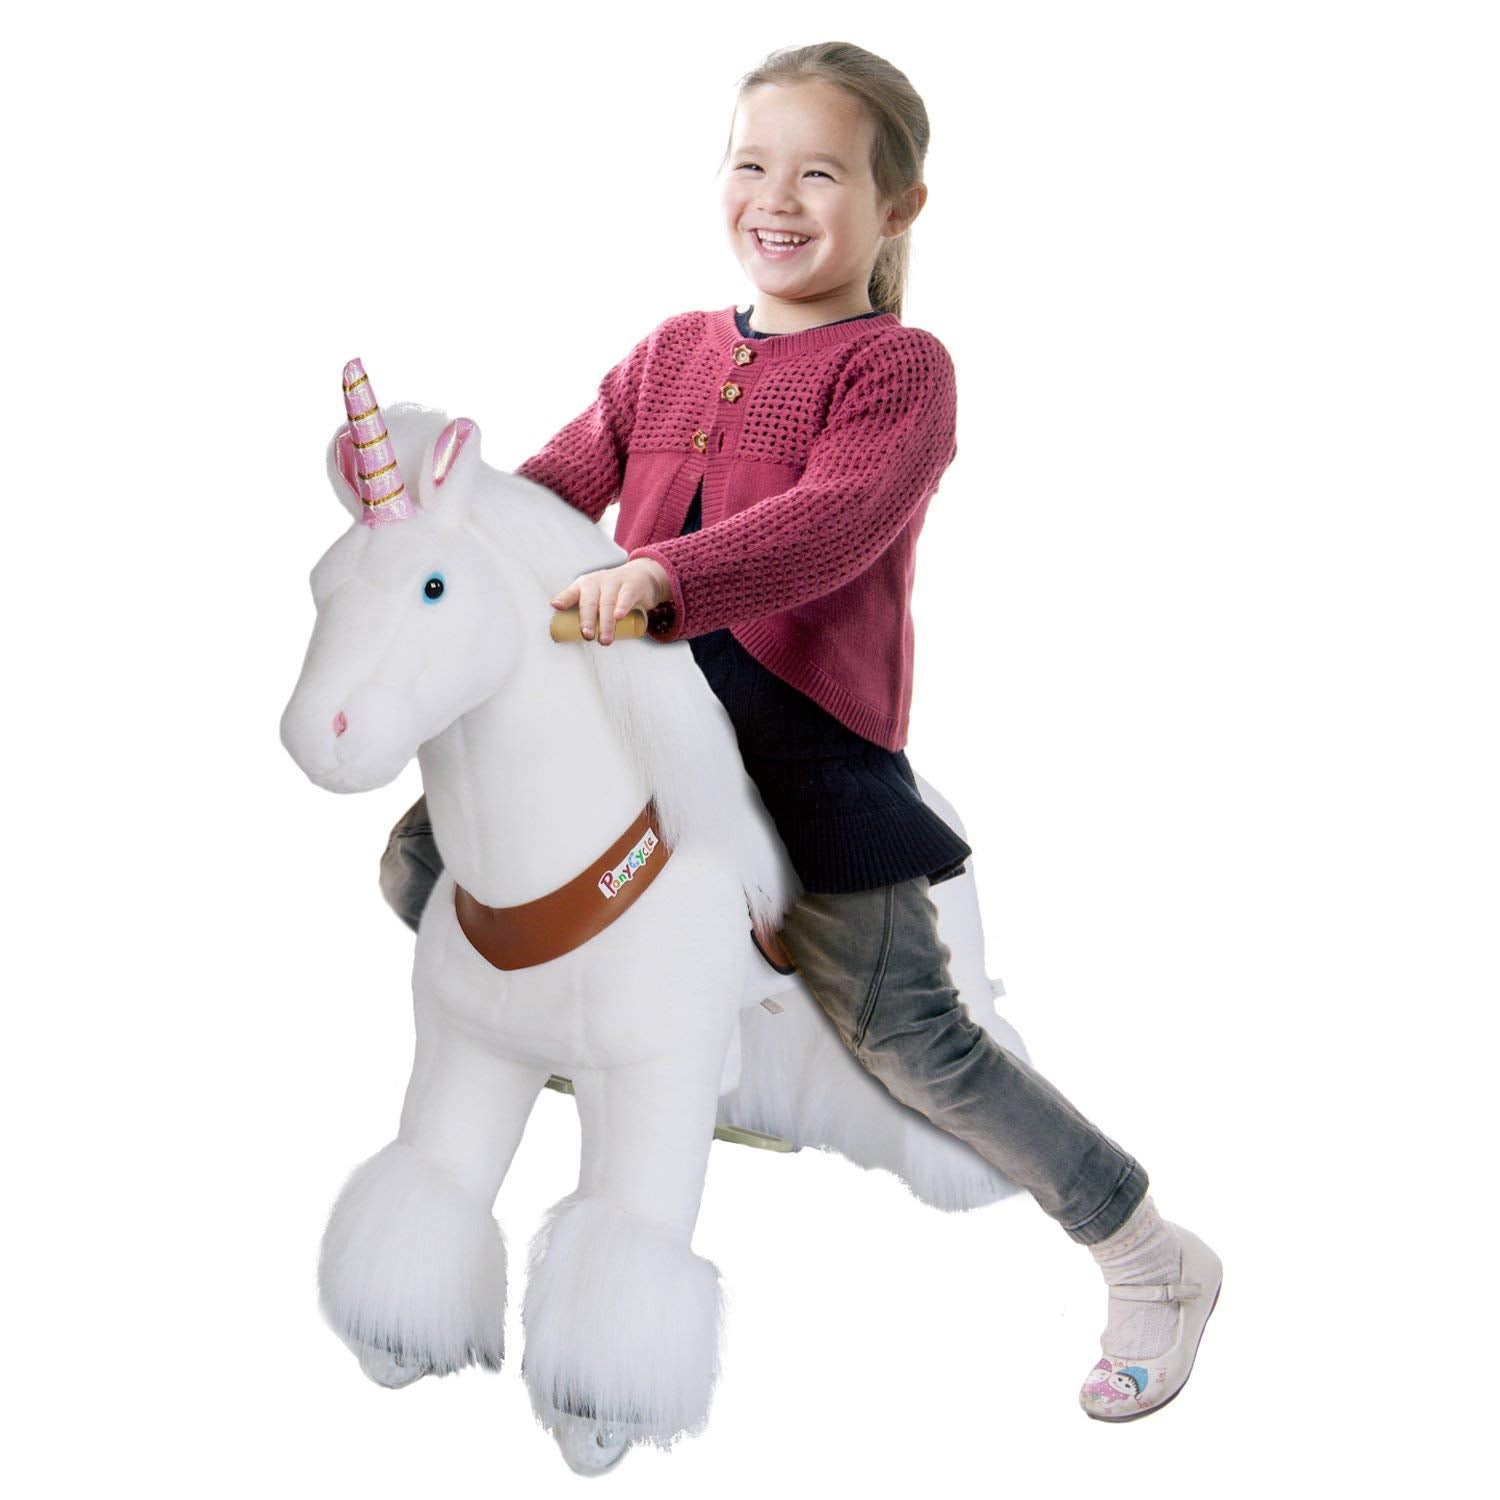 mechanical ride on unicorn